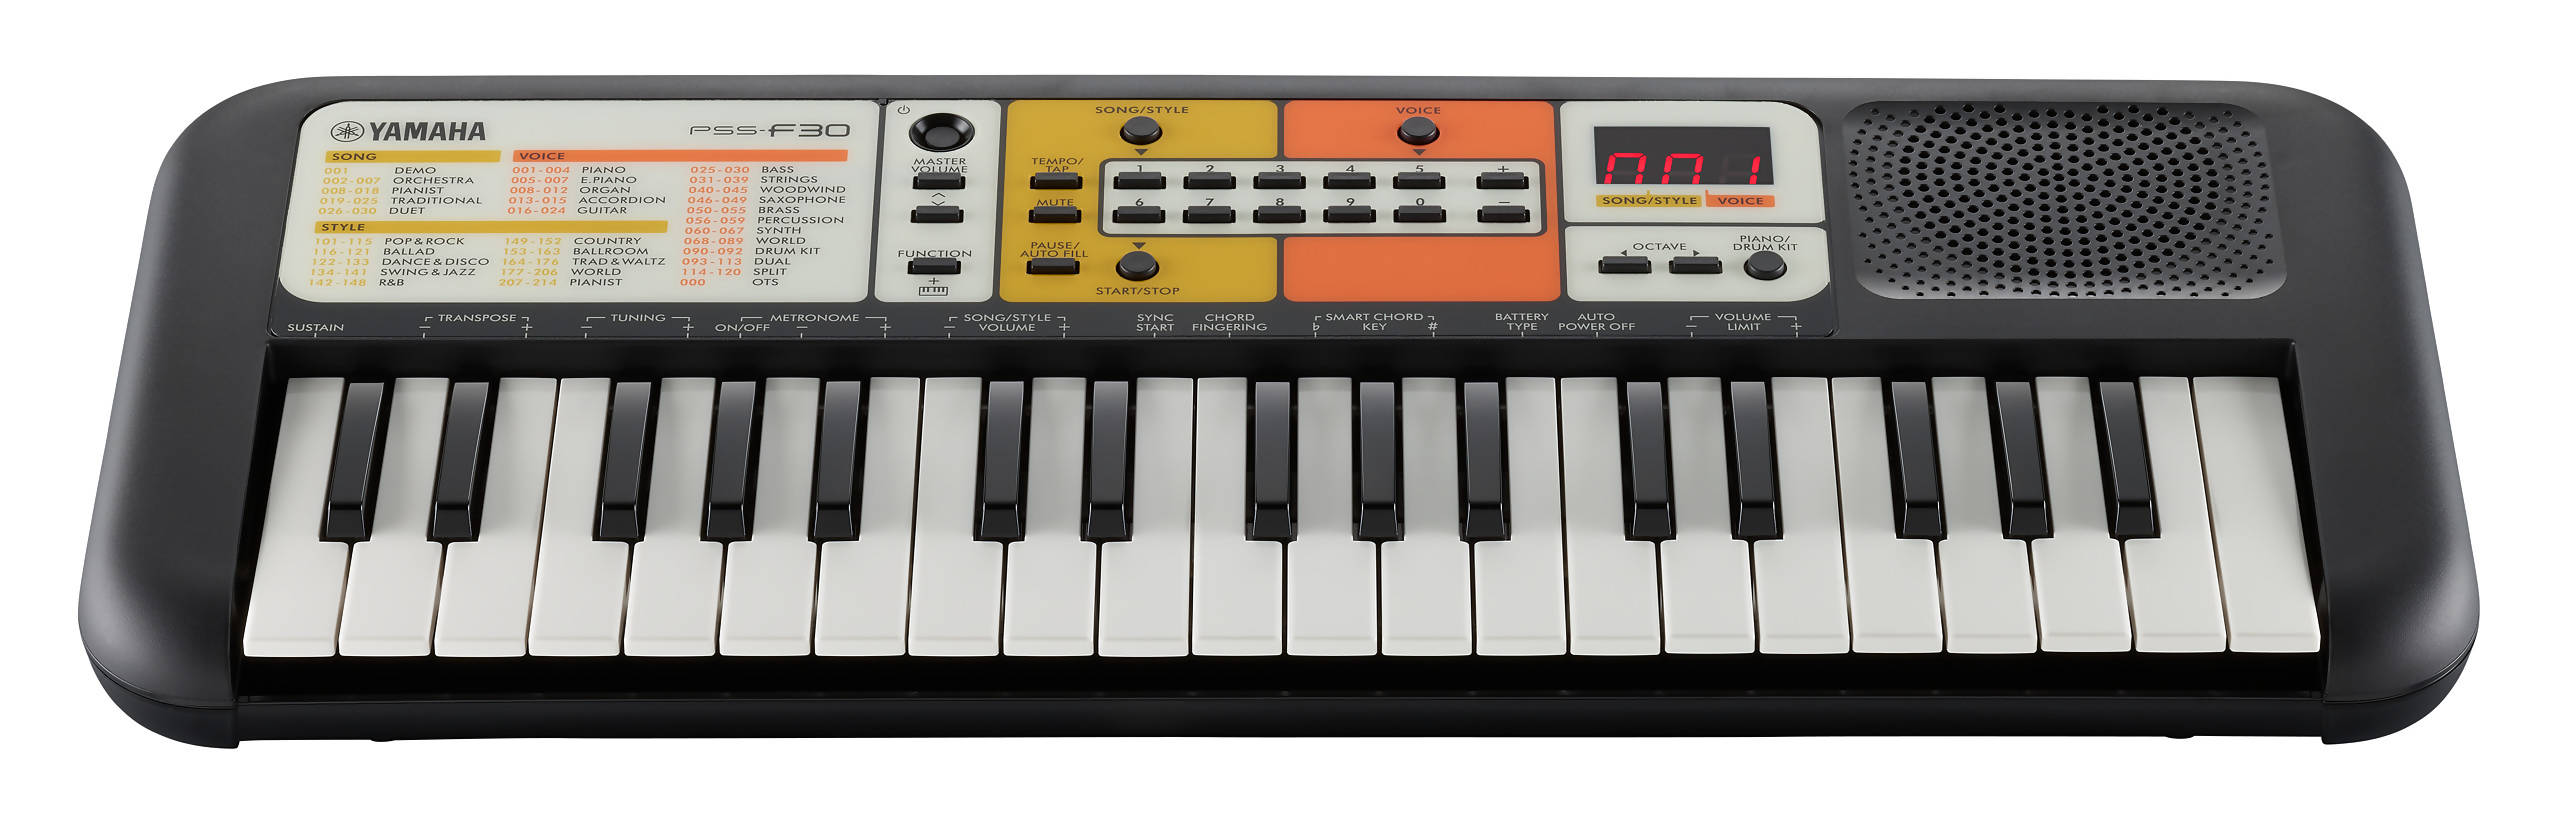 Yamaha Entertainer Keyboard